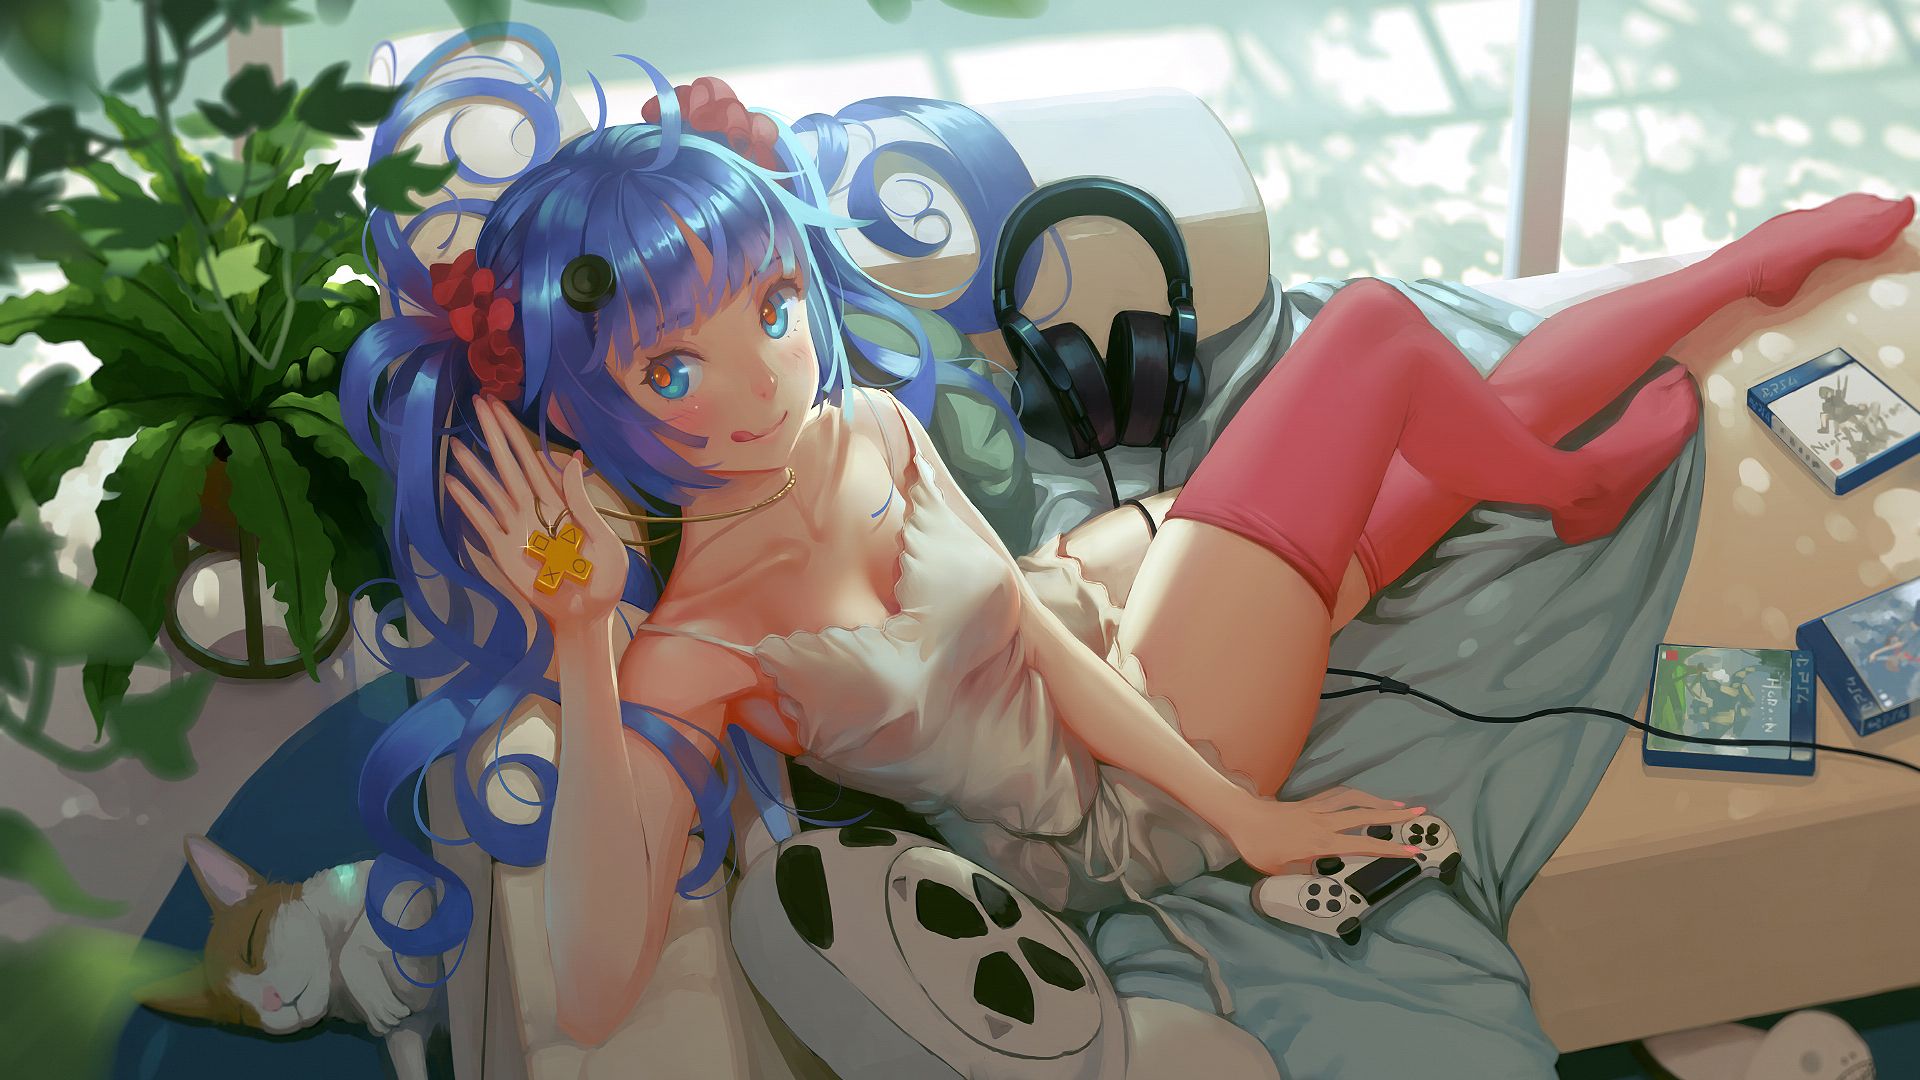 Wallpaper Lying down, cute, blue hair anime girl